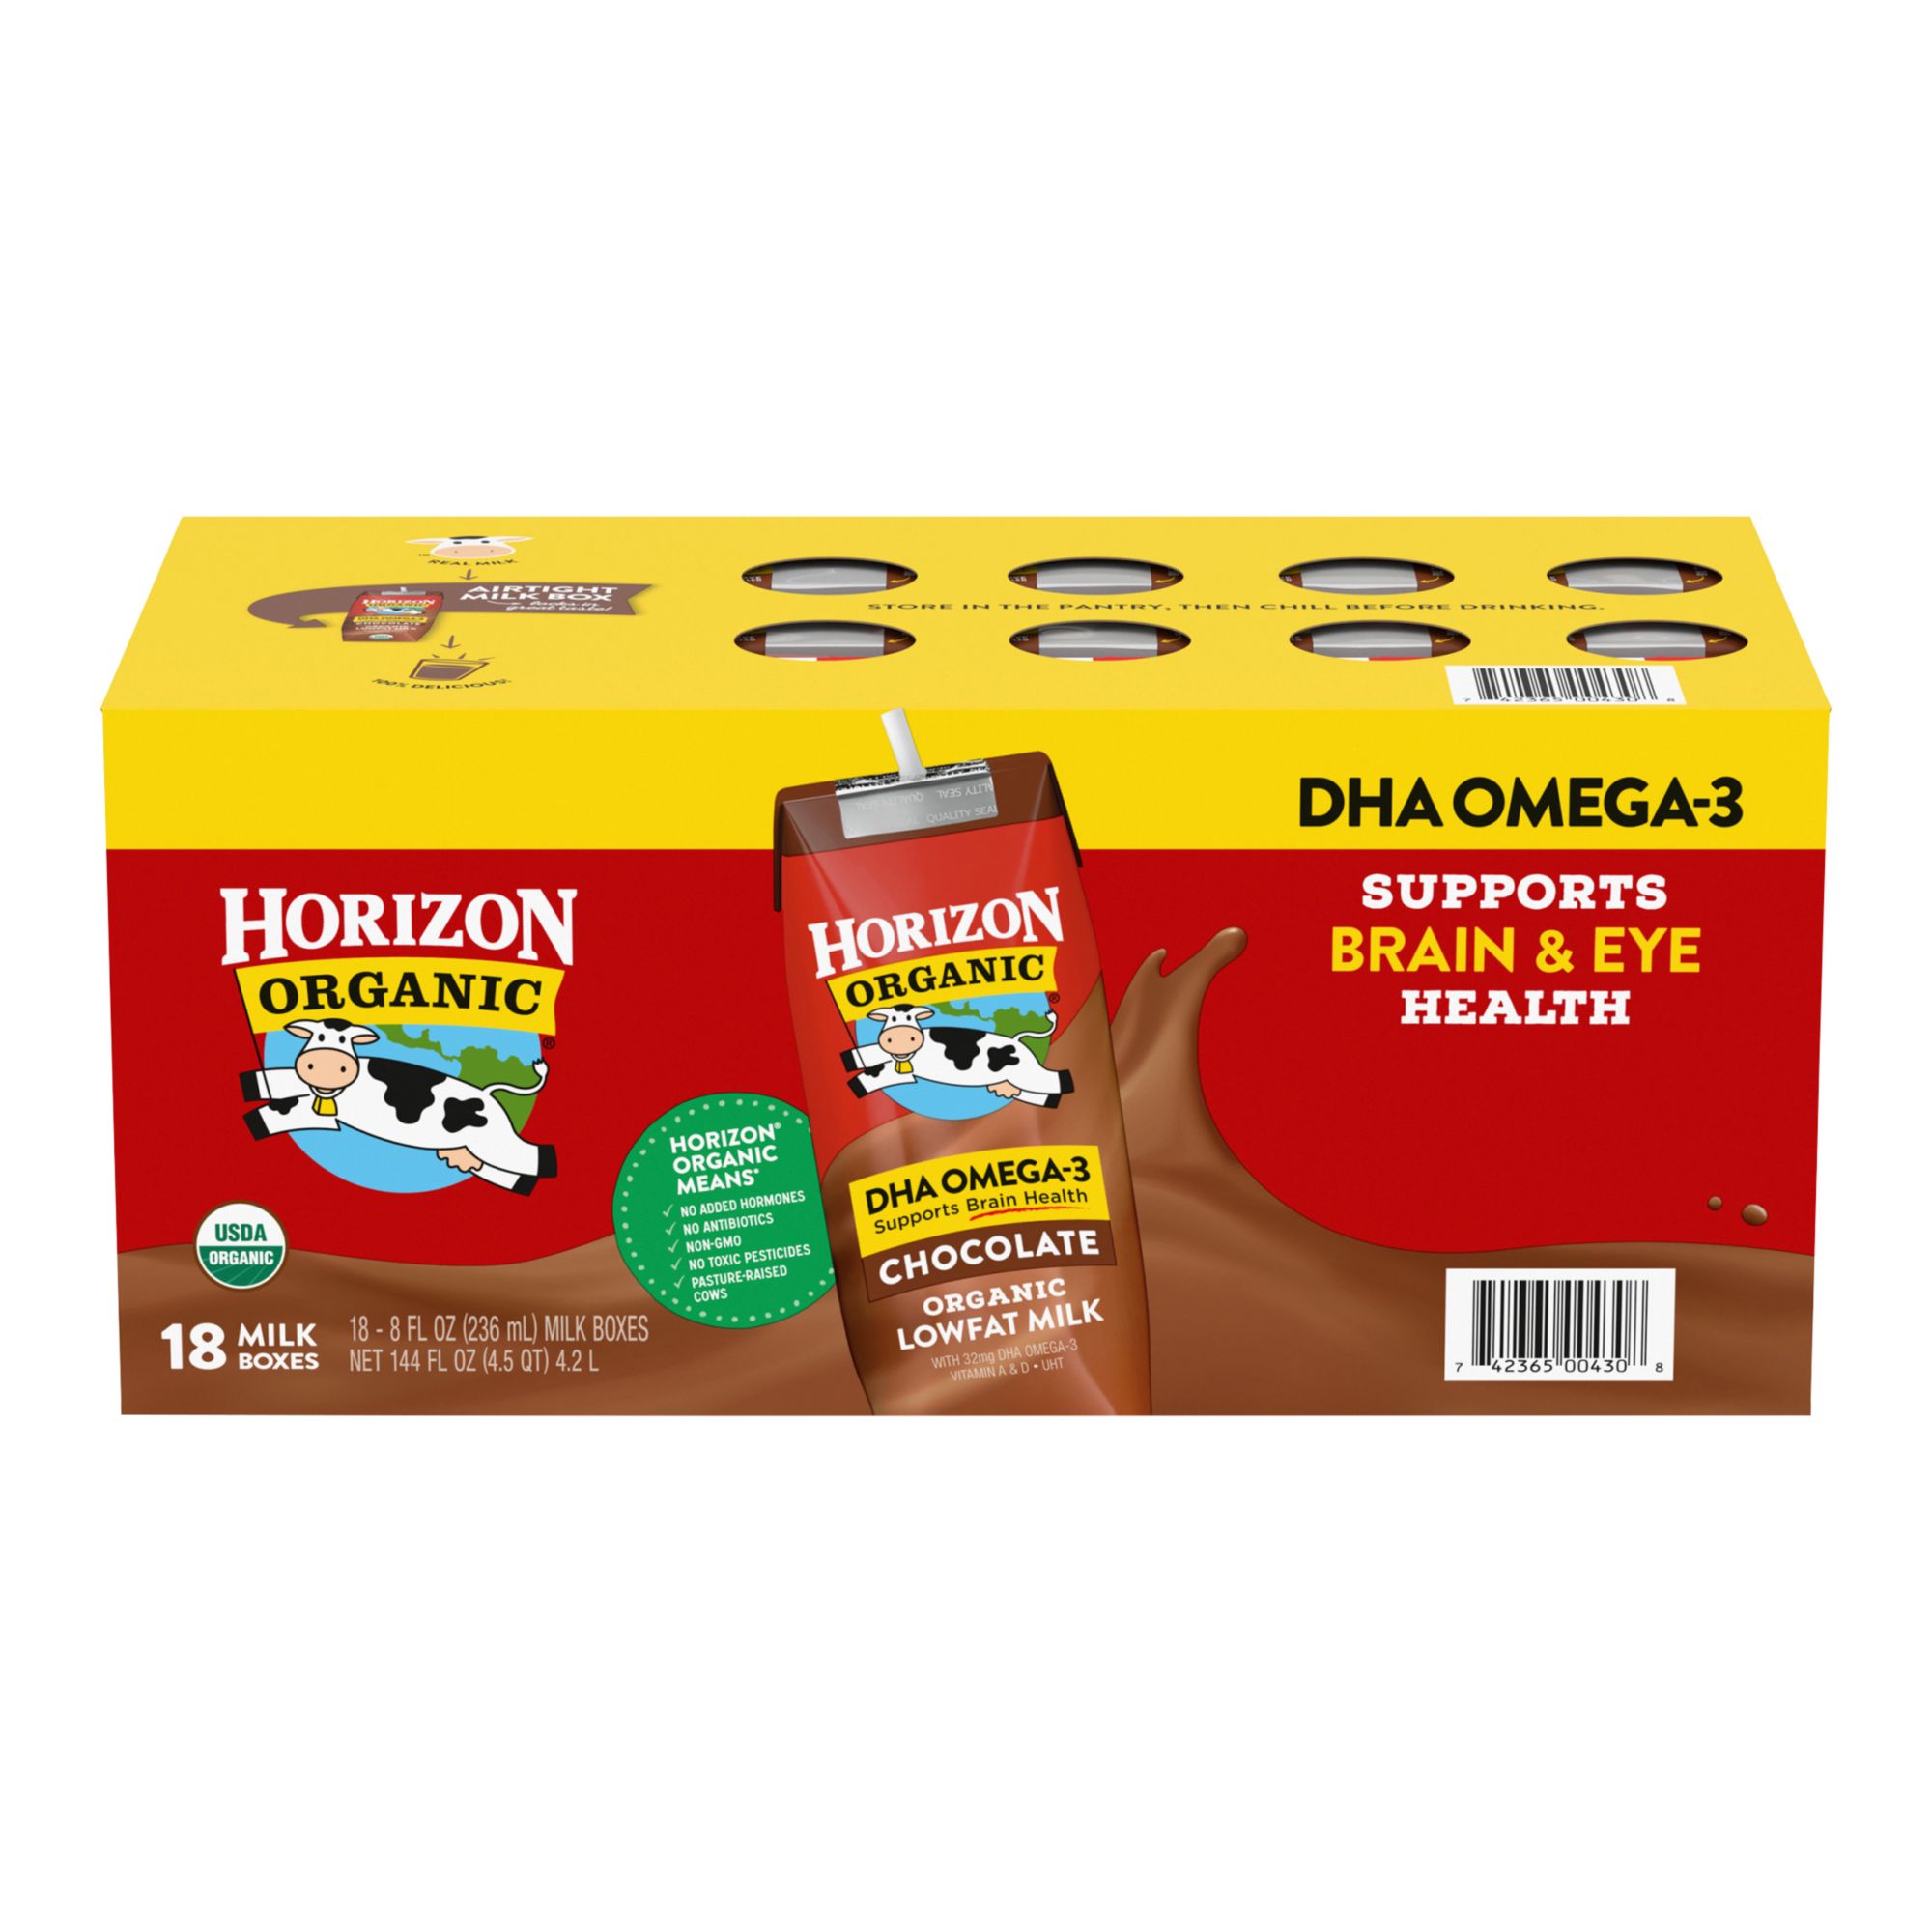 Horizon Organic DHA Omega-3 Chocolate Low-Fat Milk, 18 pk./8 oz.